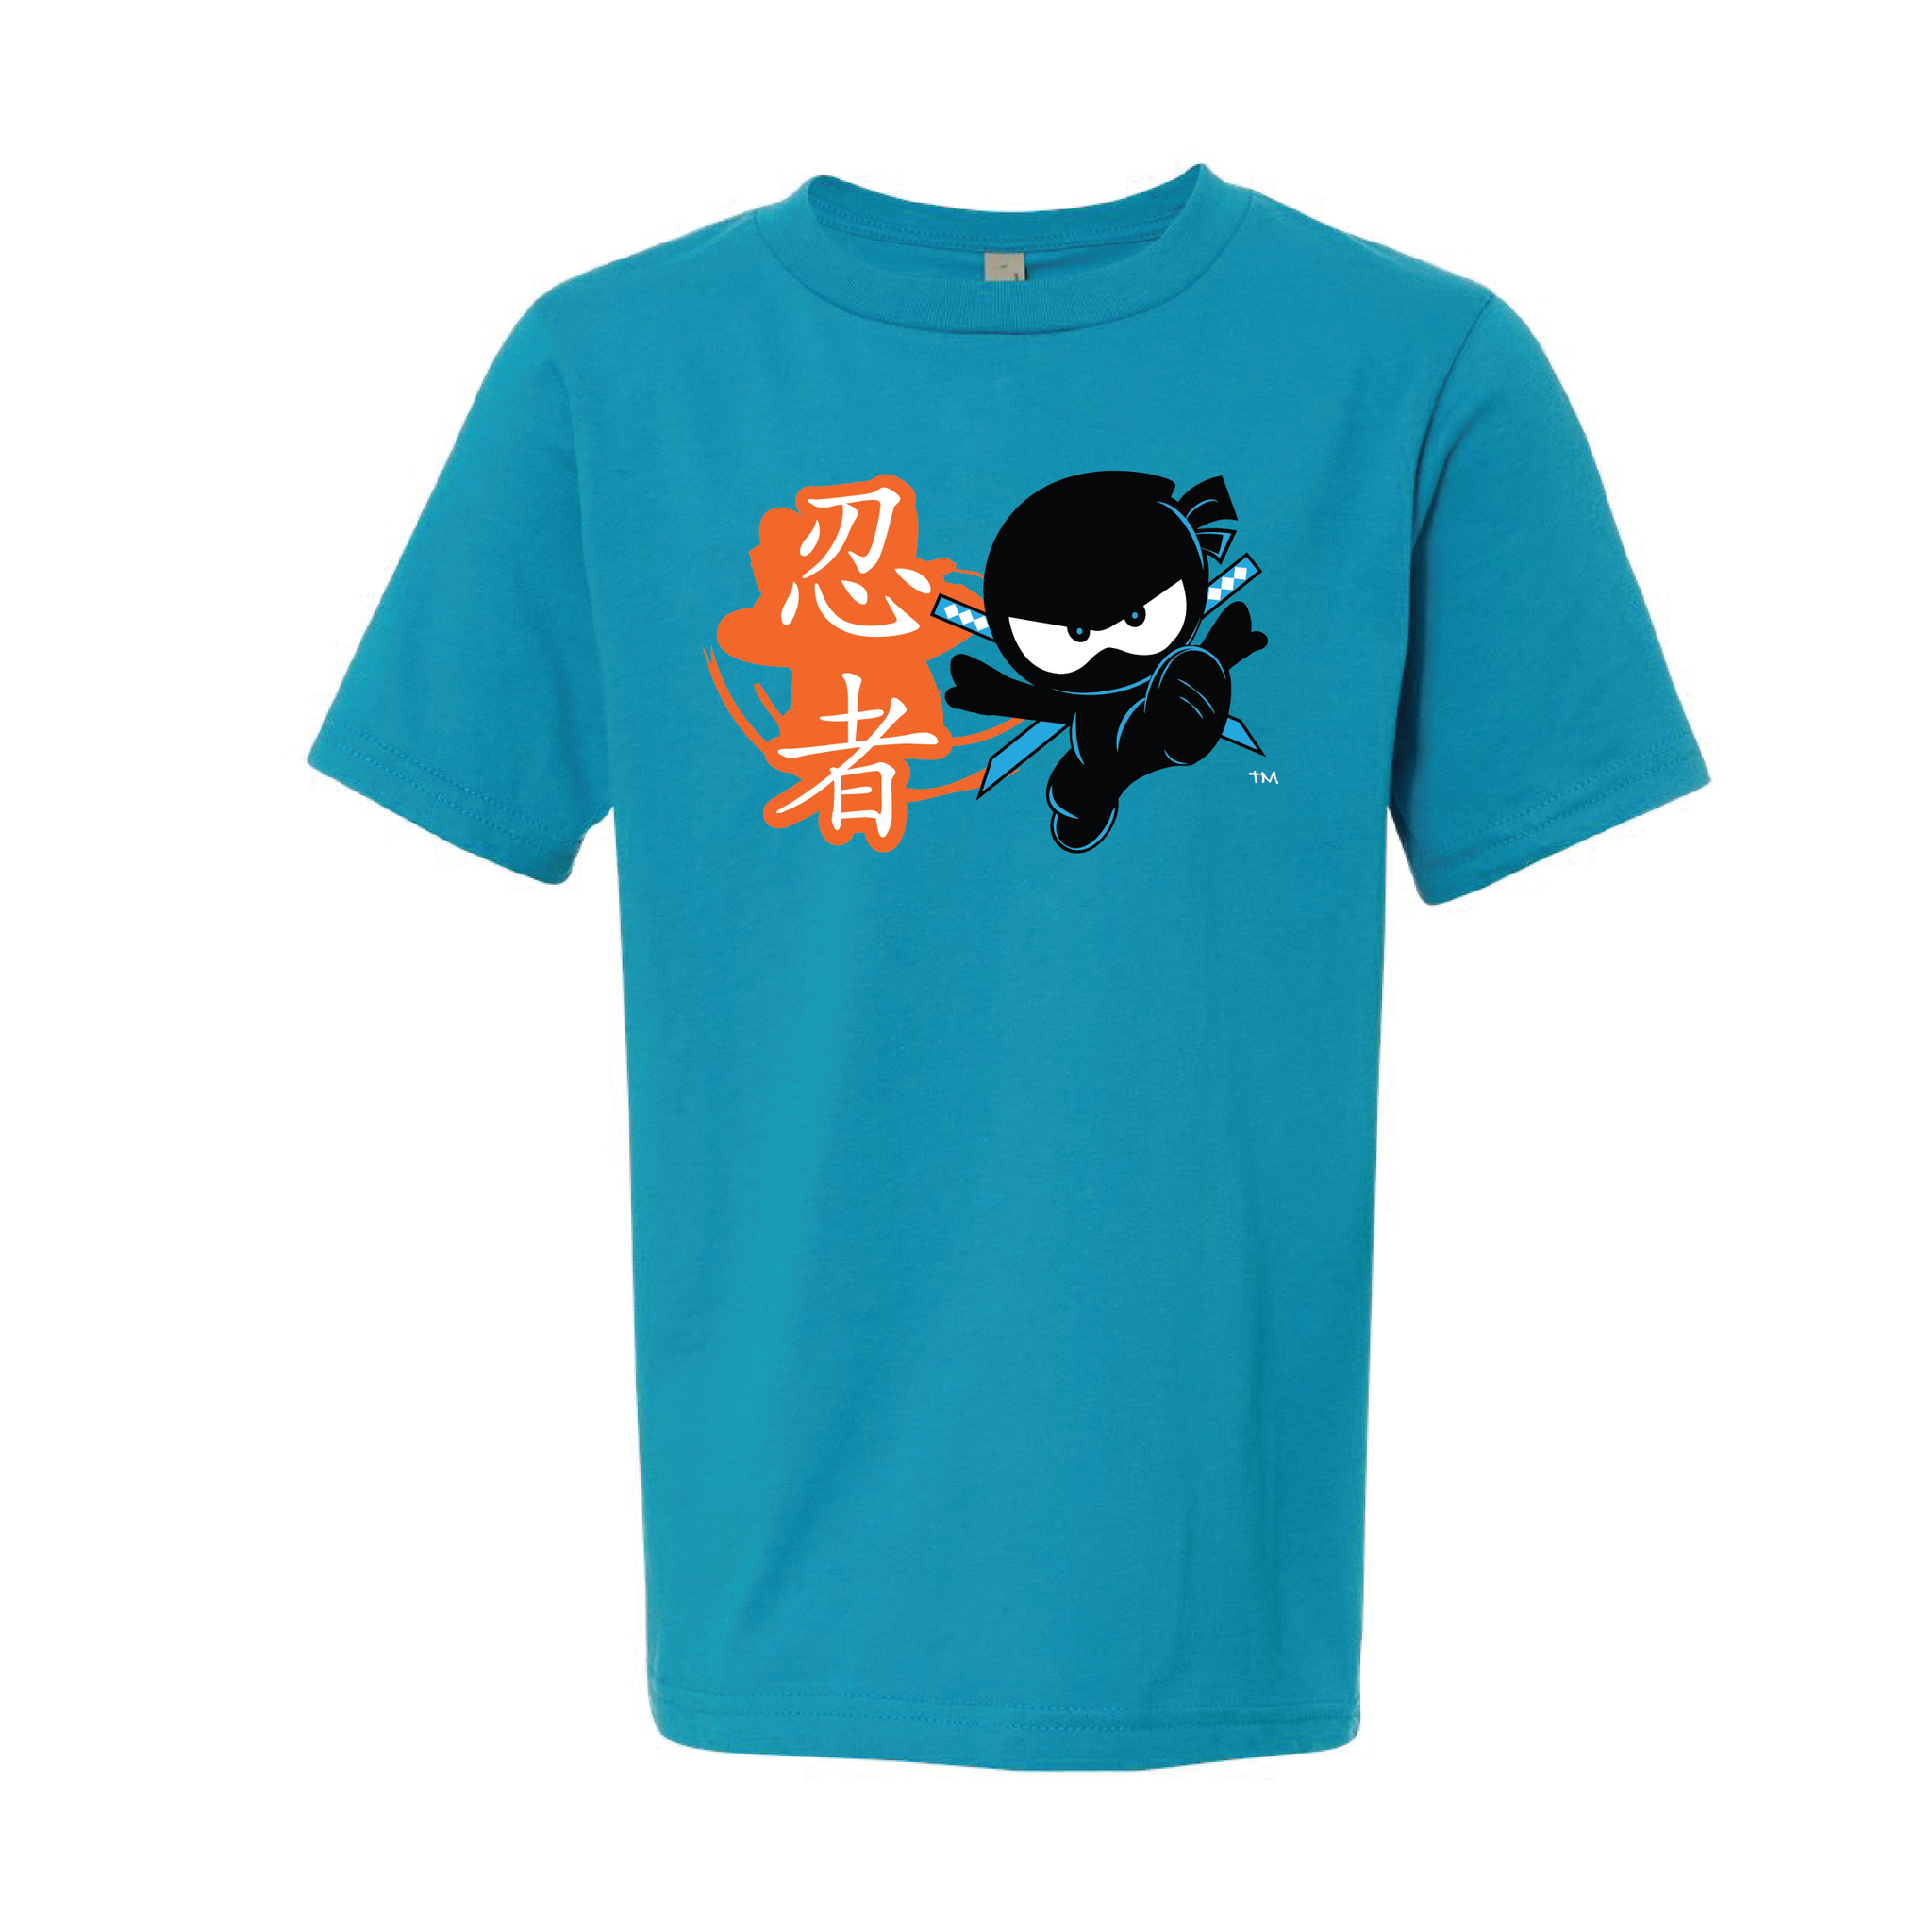 Ninja Script T Shirt 3.0 ©